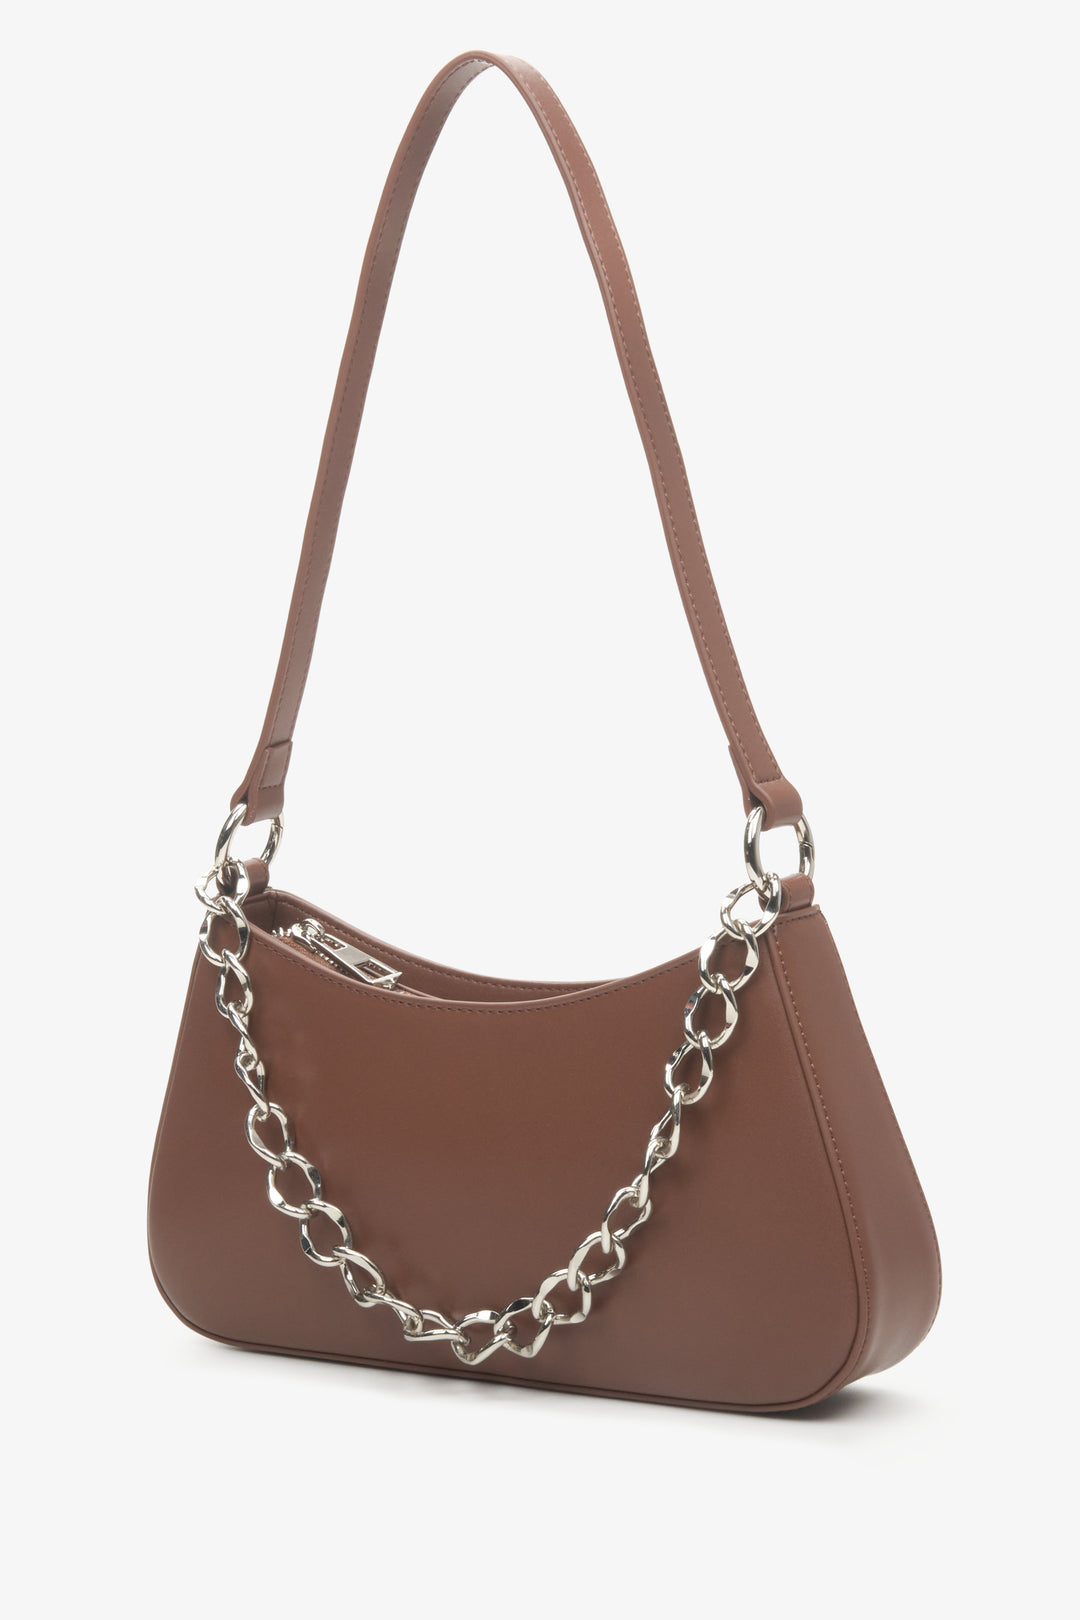 Women's brown leather baguette chain bag by Estro.